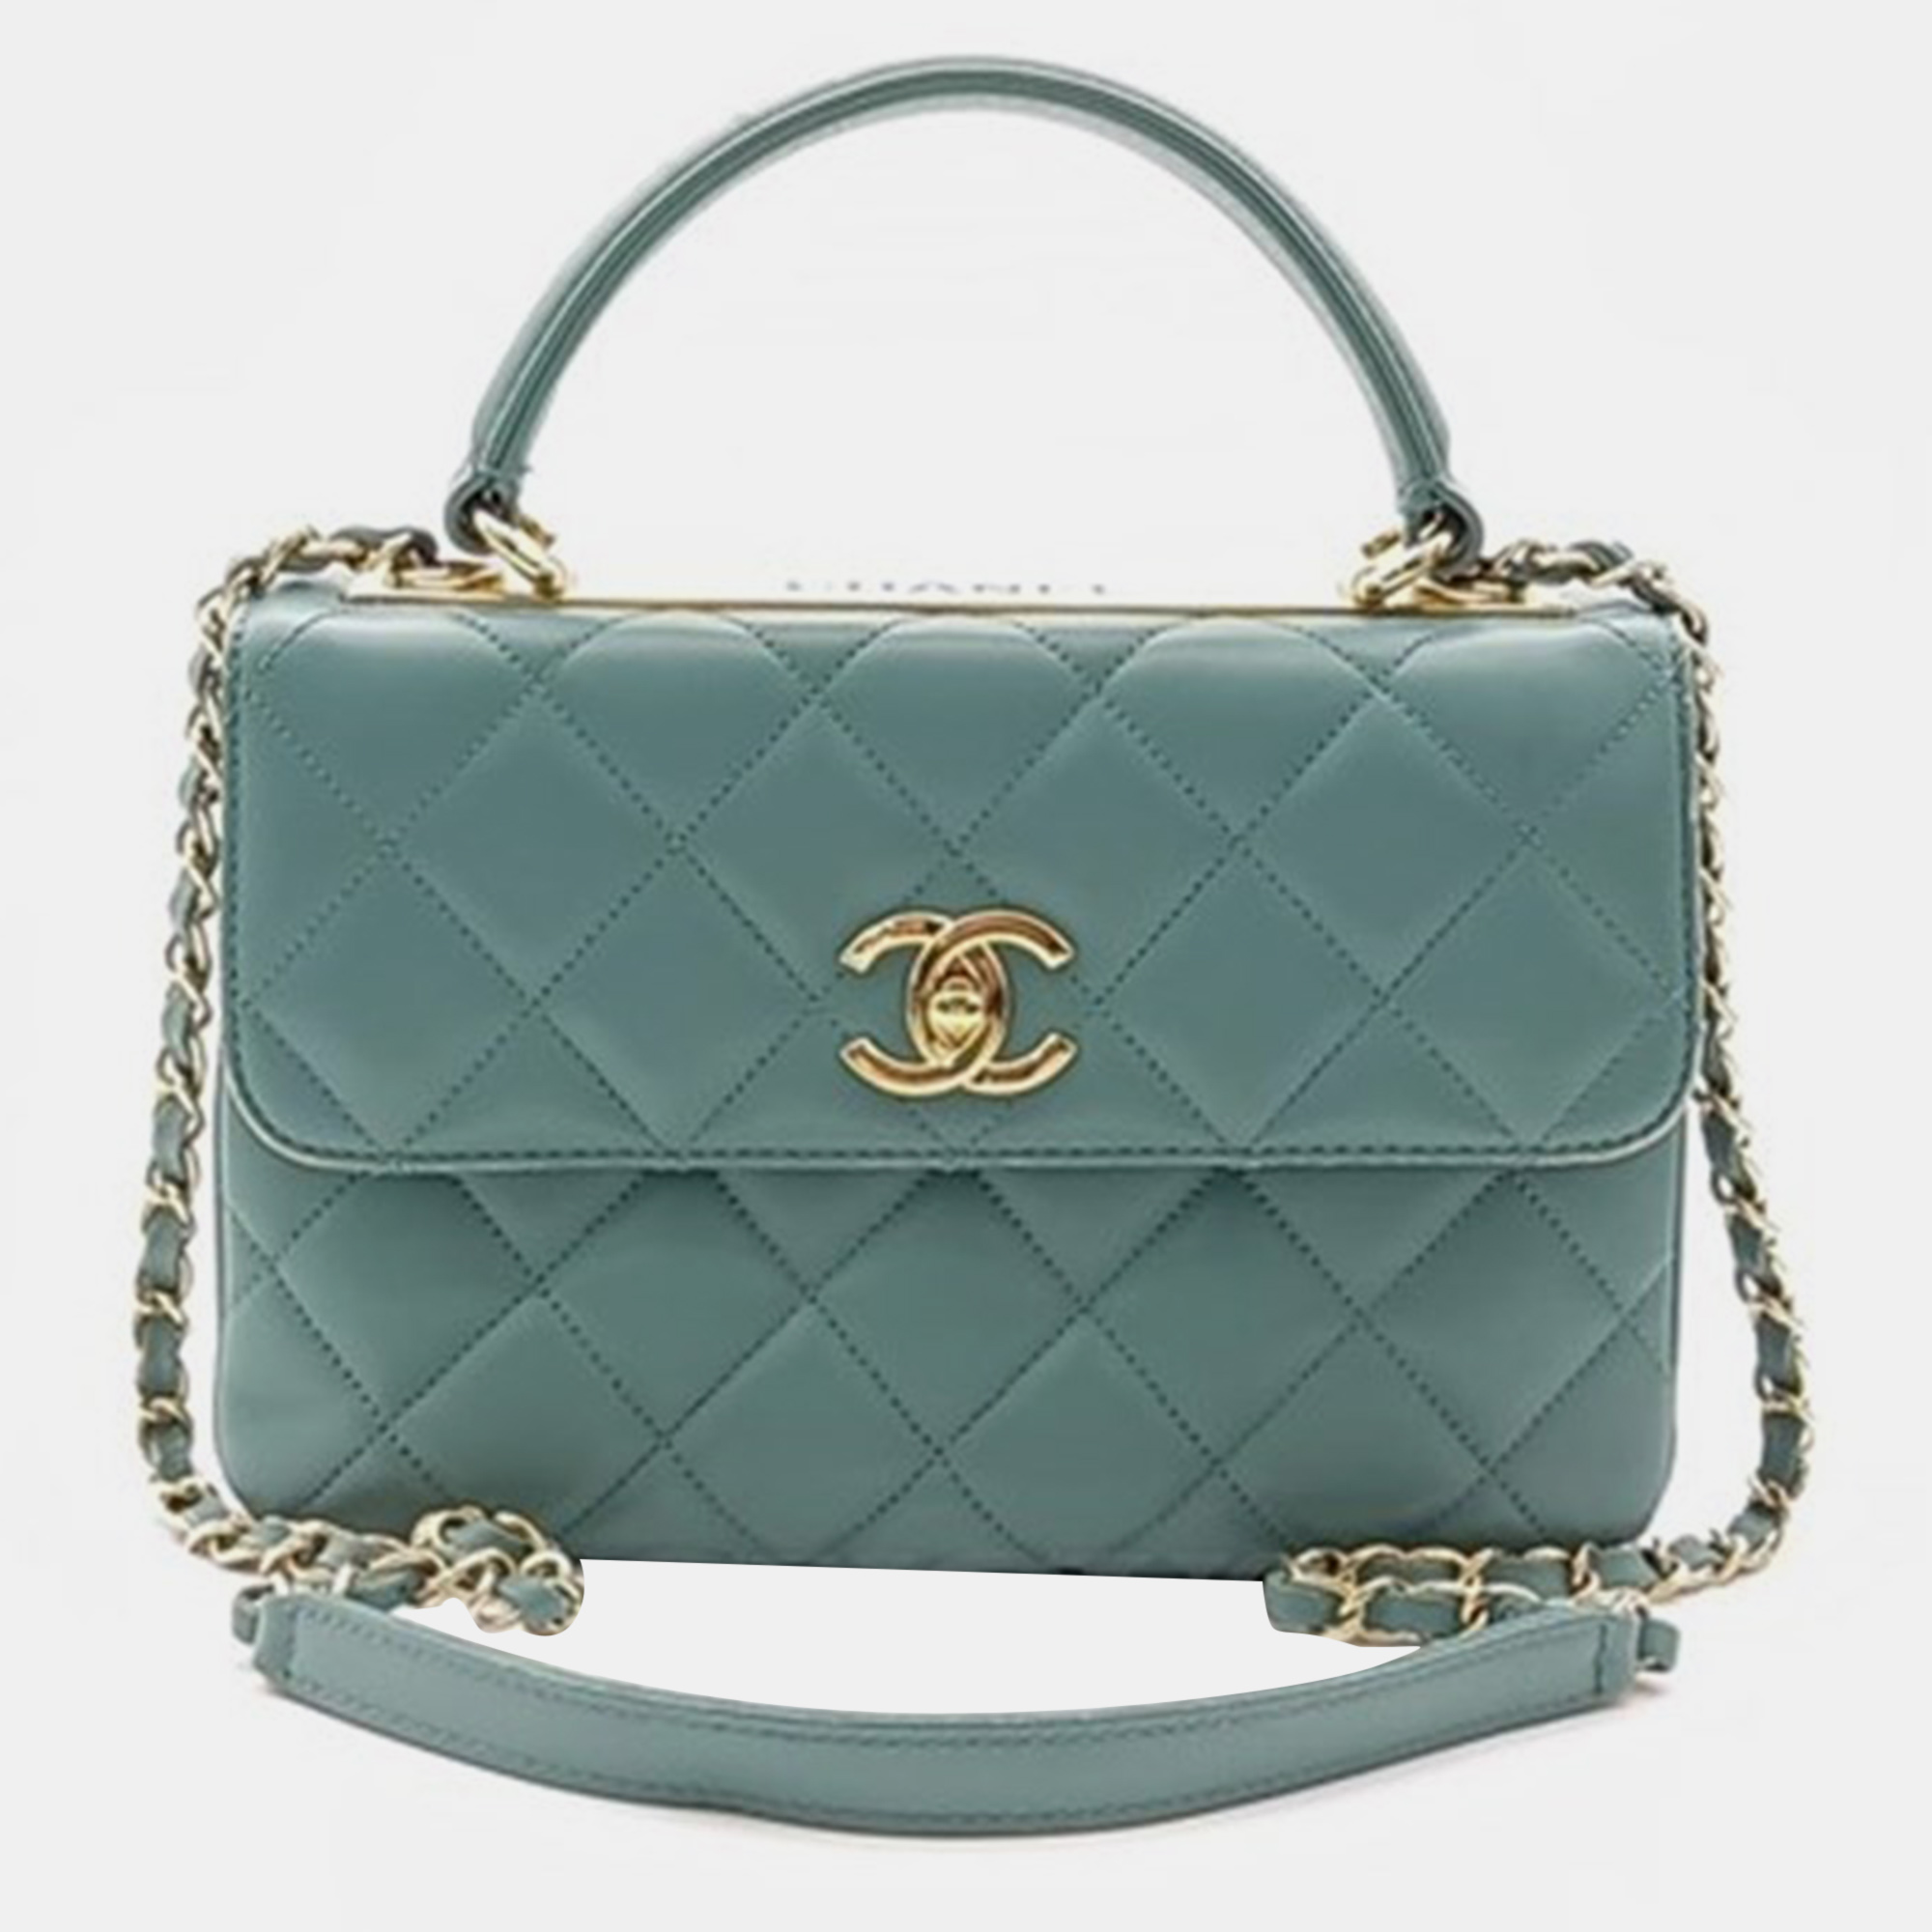 Chanel trendy cc small bag